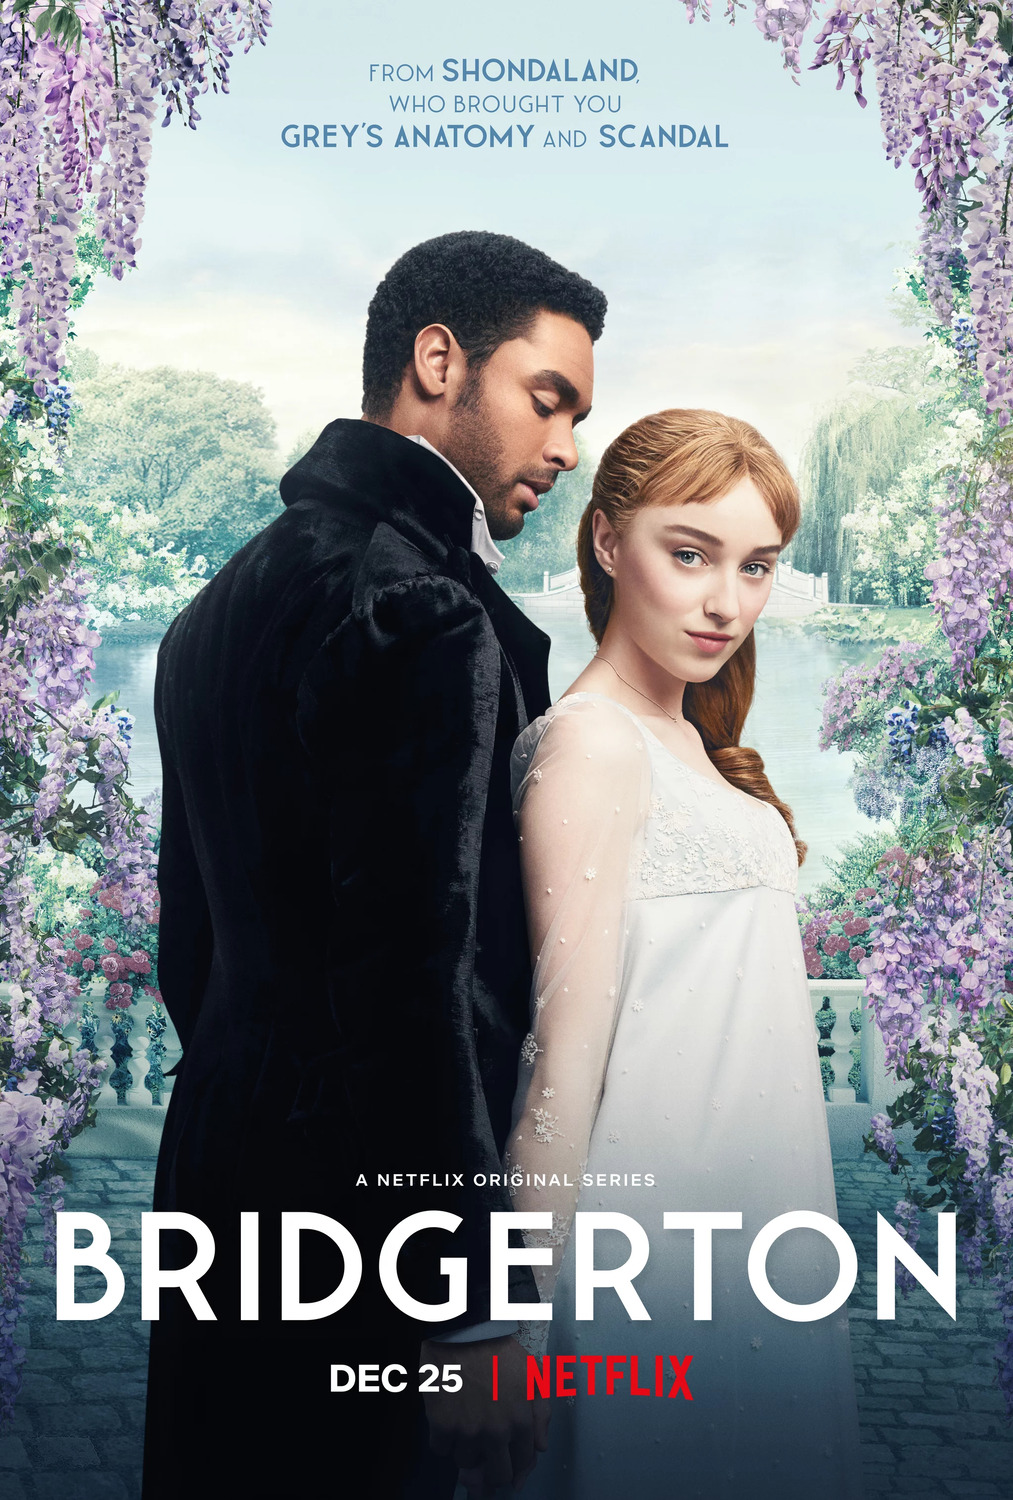 Bridgerton, al doilea cel mai popular serial la nivel mondial, în 2021